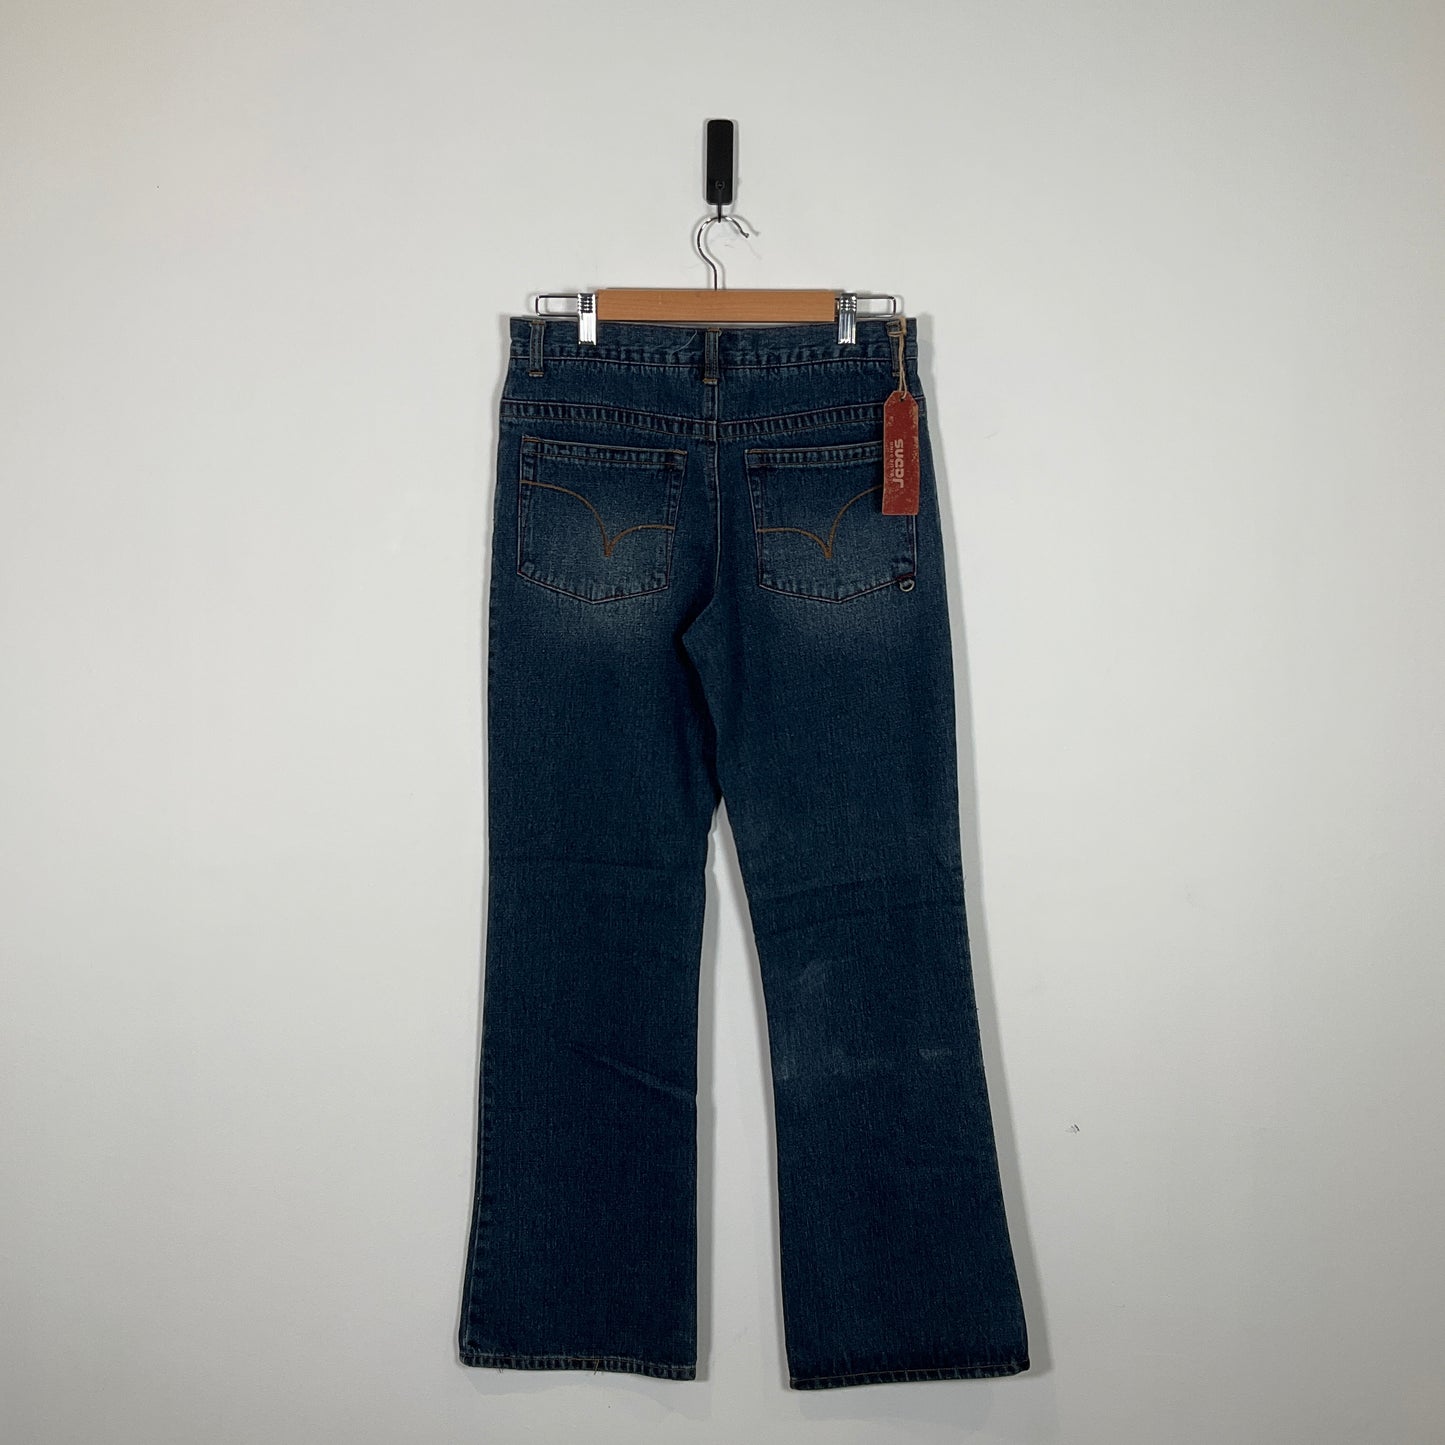 02Tandem - Jeans